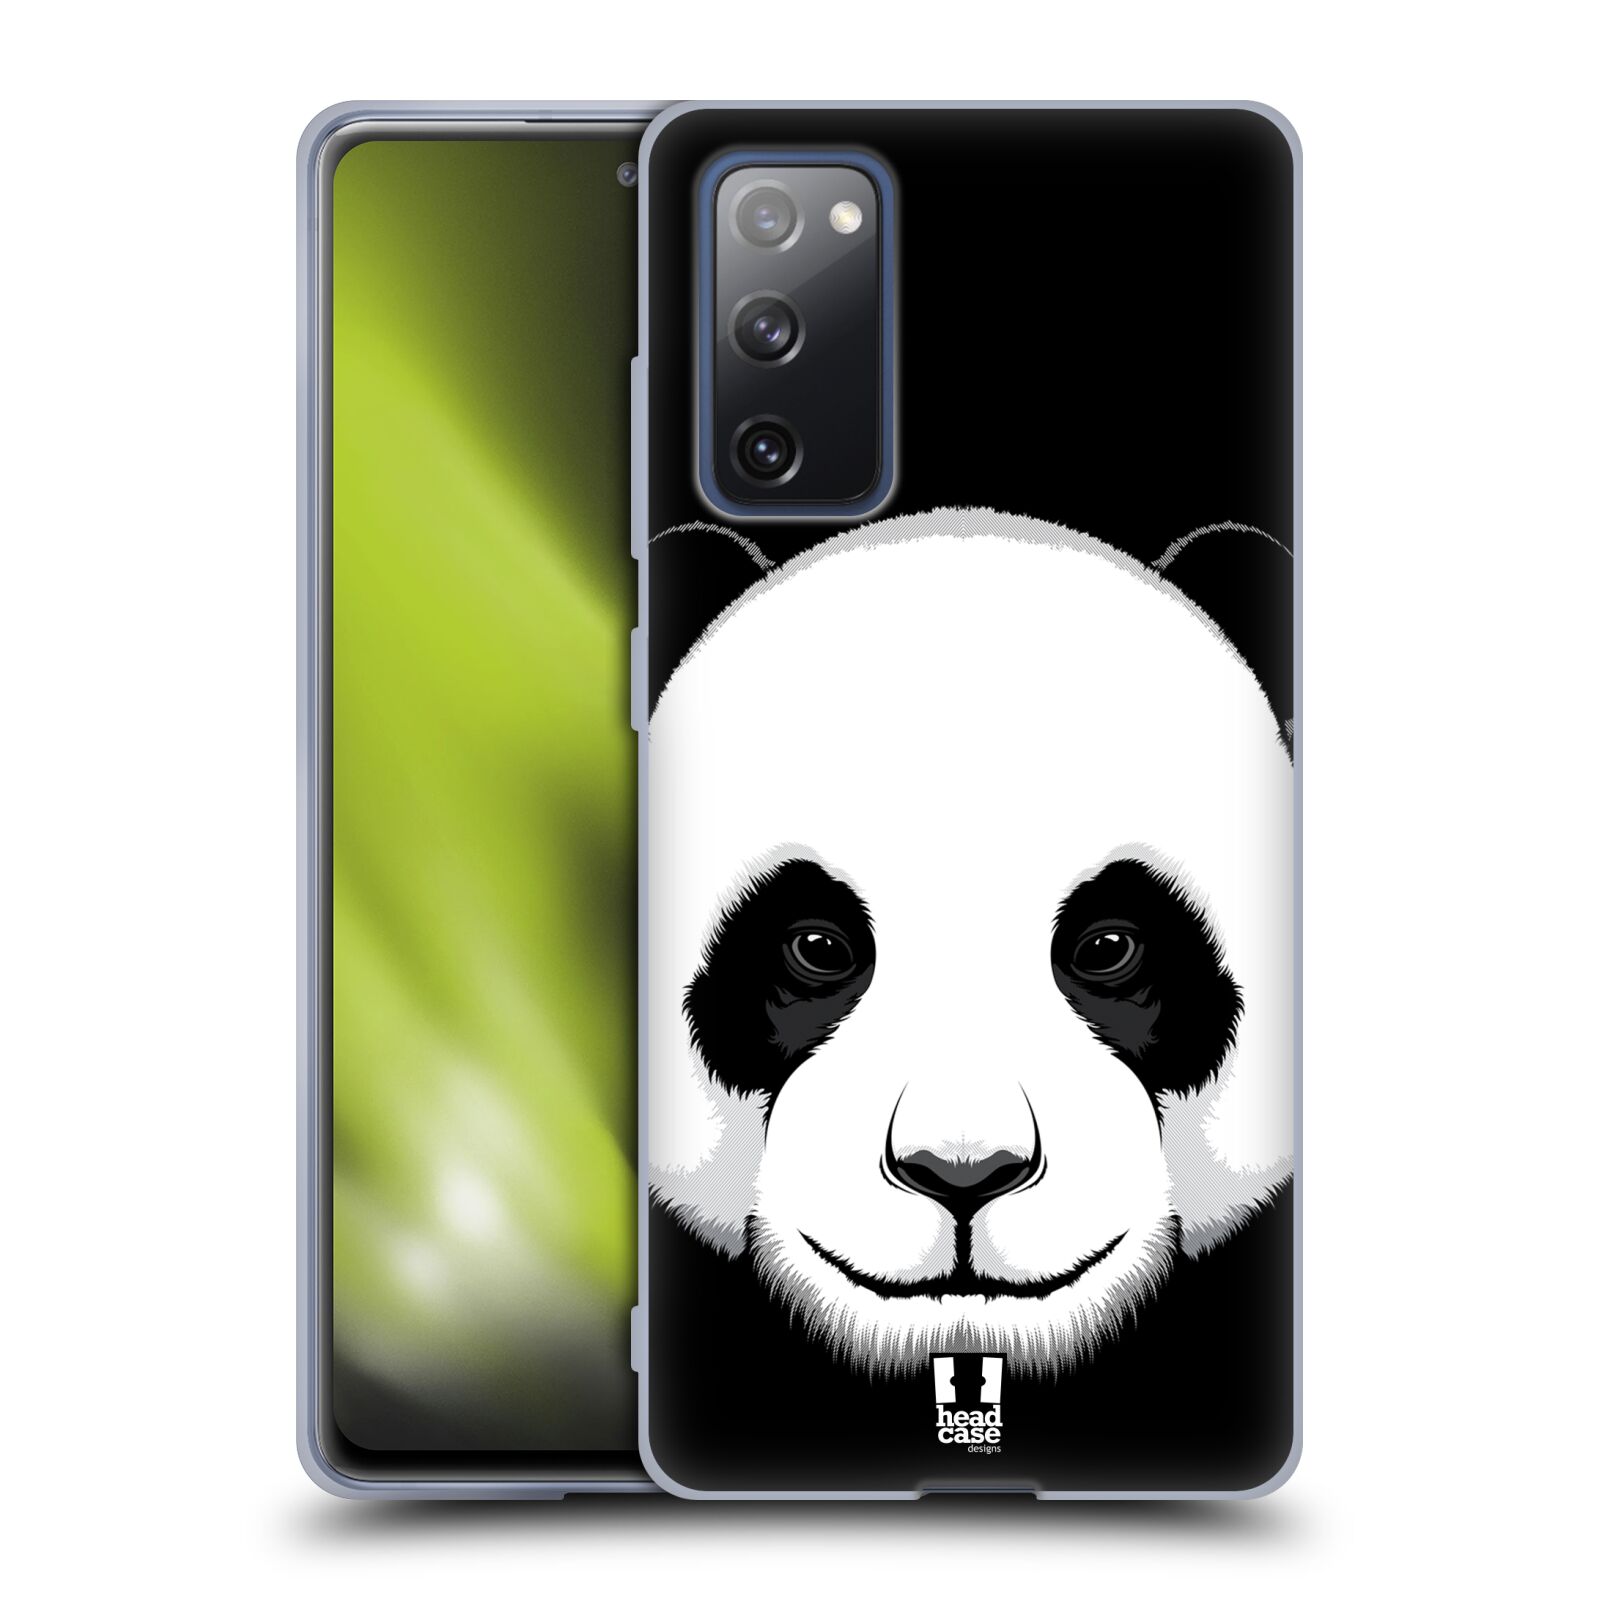 Plastový obal HEAD CASE na mobil Samsung Galaxy S20 FE / S20 FE 5G vzor Zvíře kreslená tvář panda